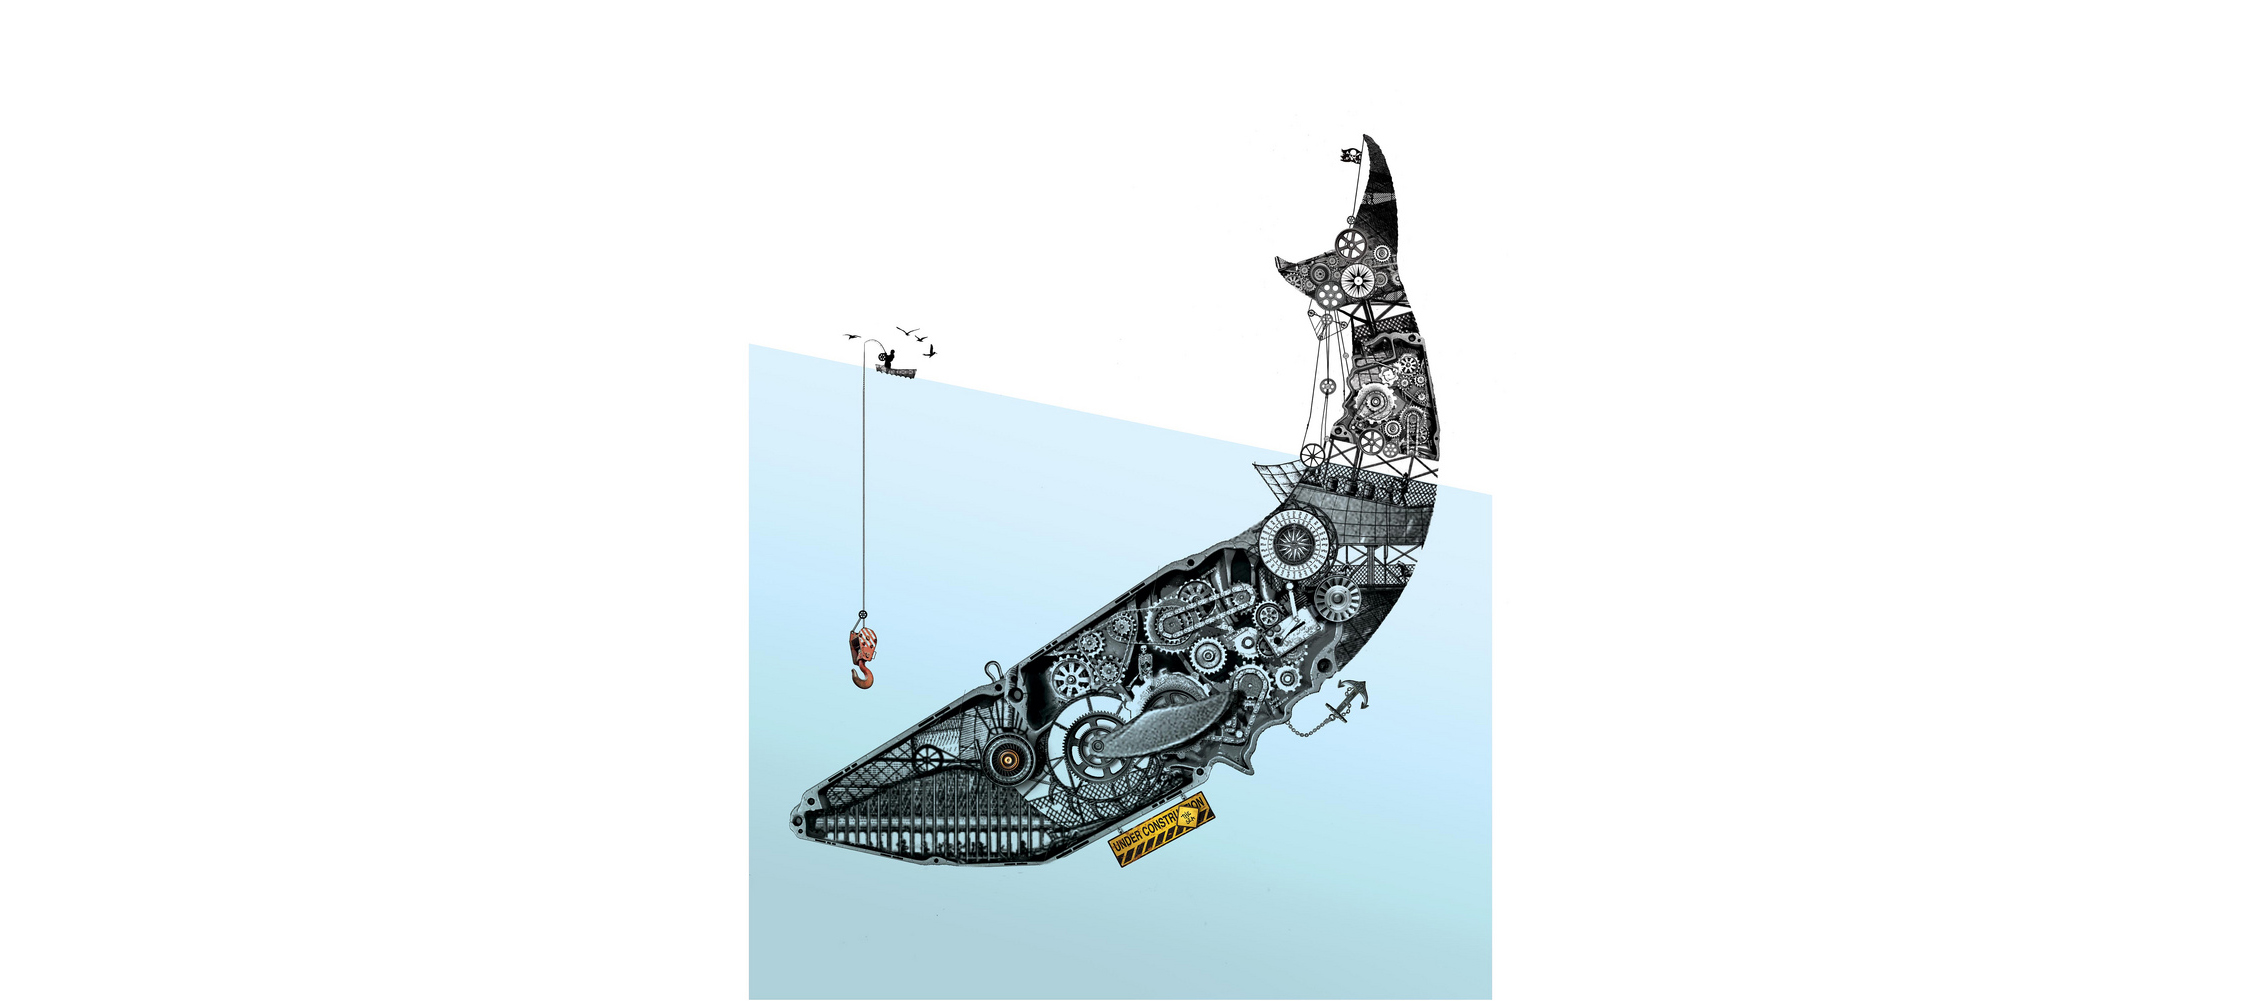 ‘Mechanic Whale’, de Diego Hernan Mazzeo